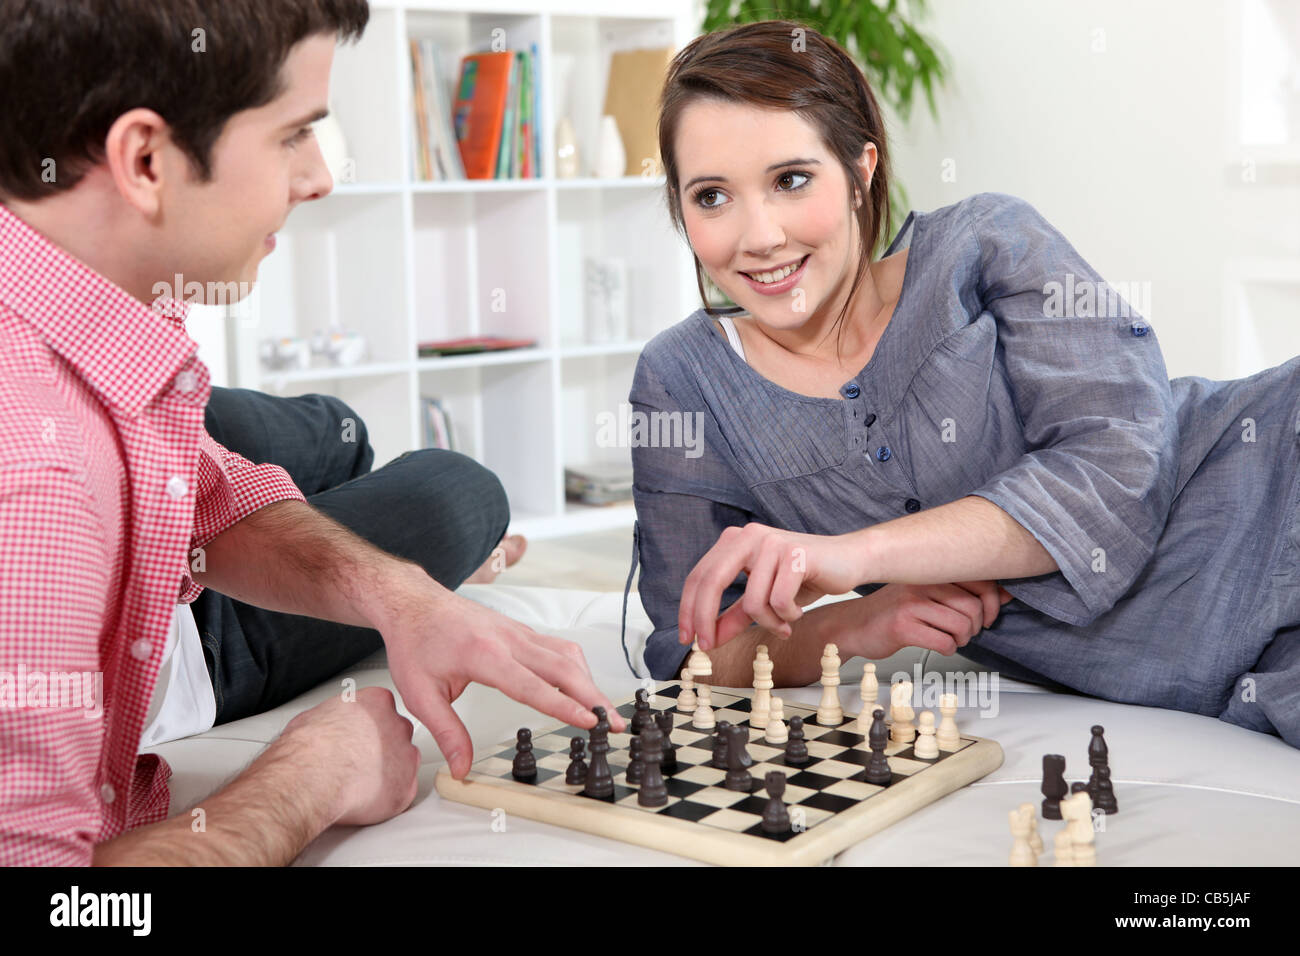 We like playing chess. Фото девушка играет в шахматы с мужчиной.